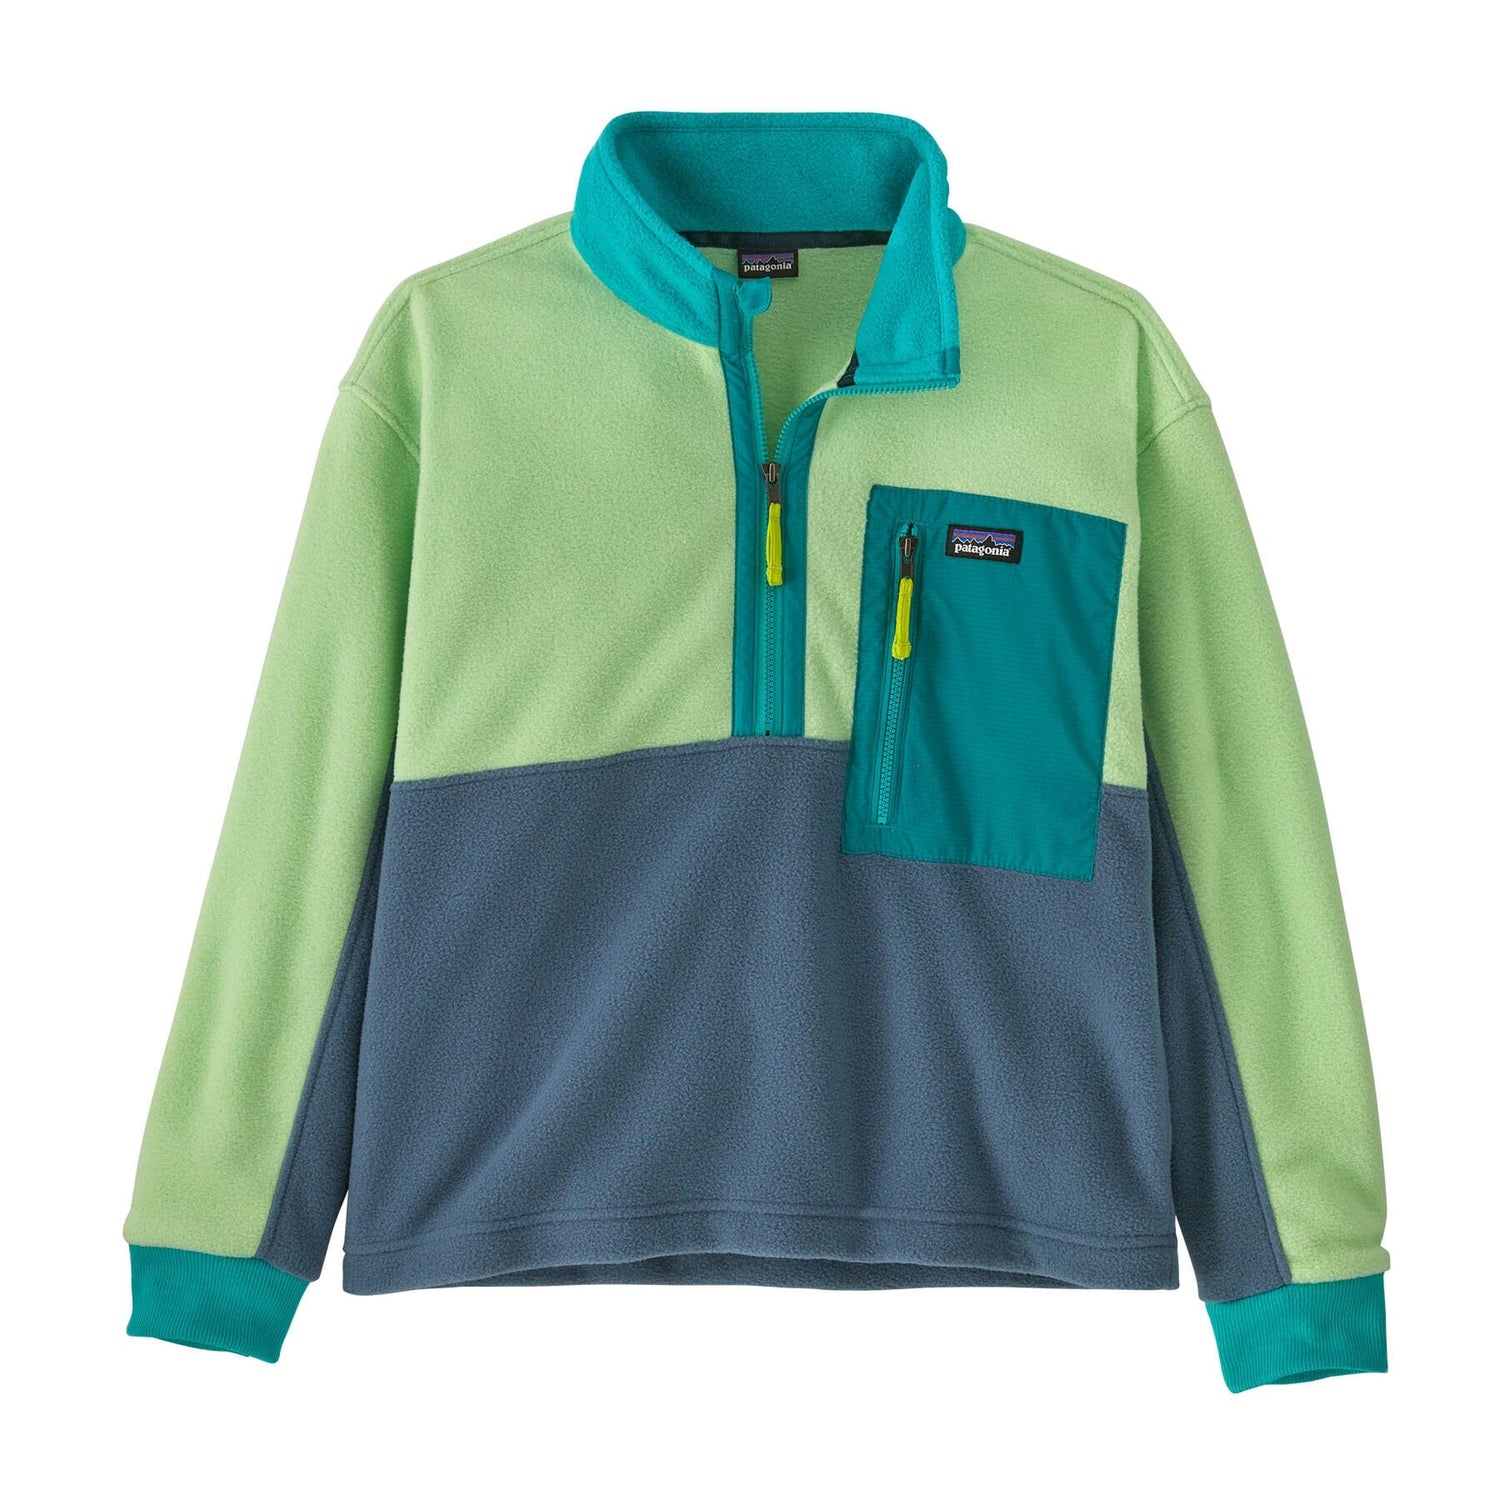 Patagonia - Kids Microdini 1/2 Zip fleece shirt - 100% recycled polyester - Weekendbee - sustainable sportswear